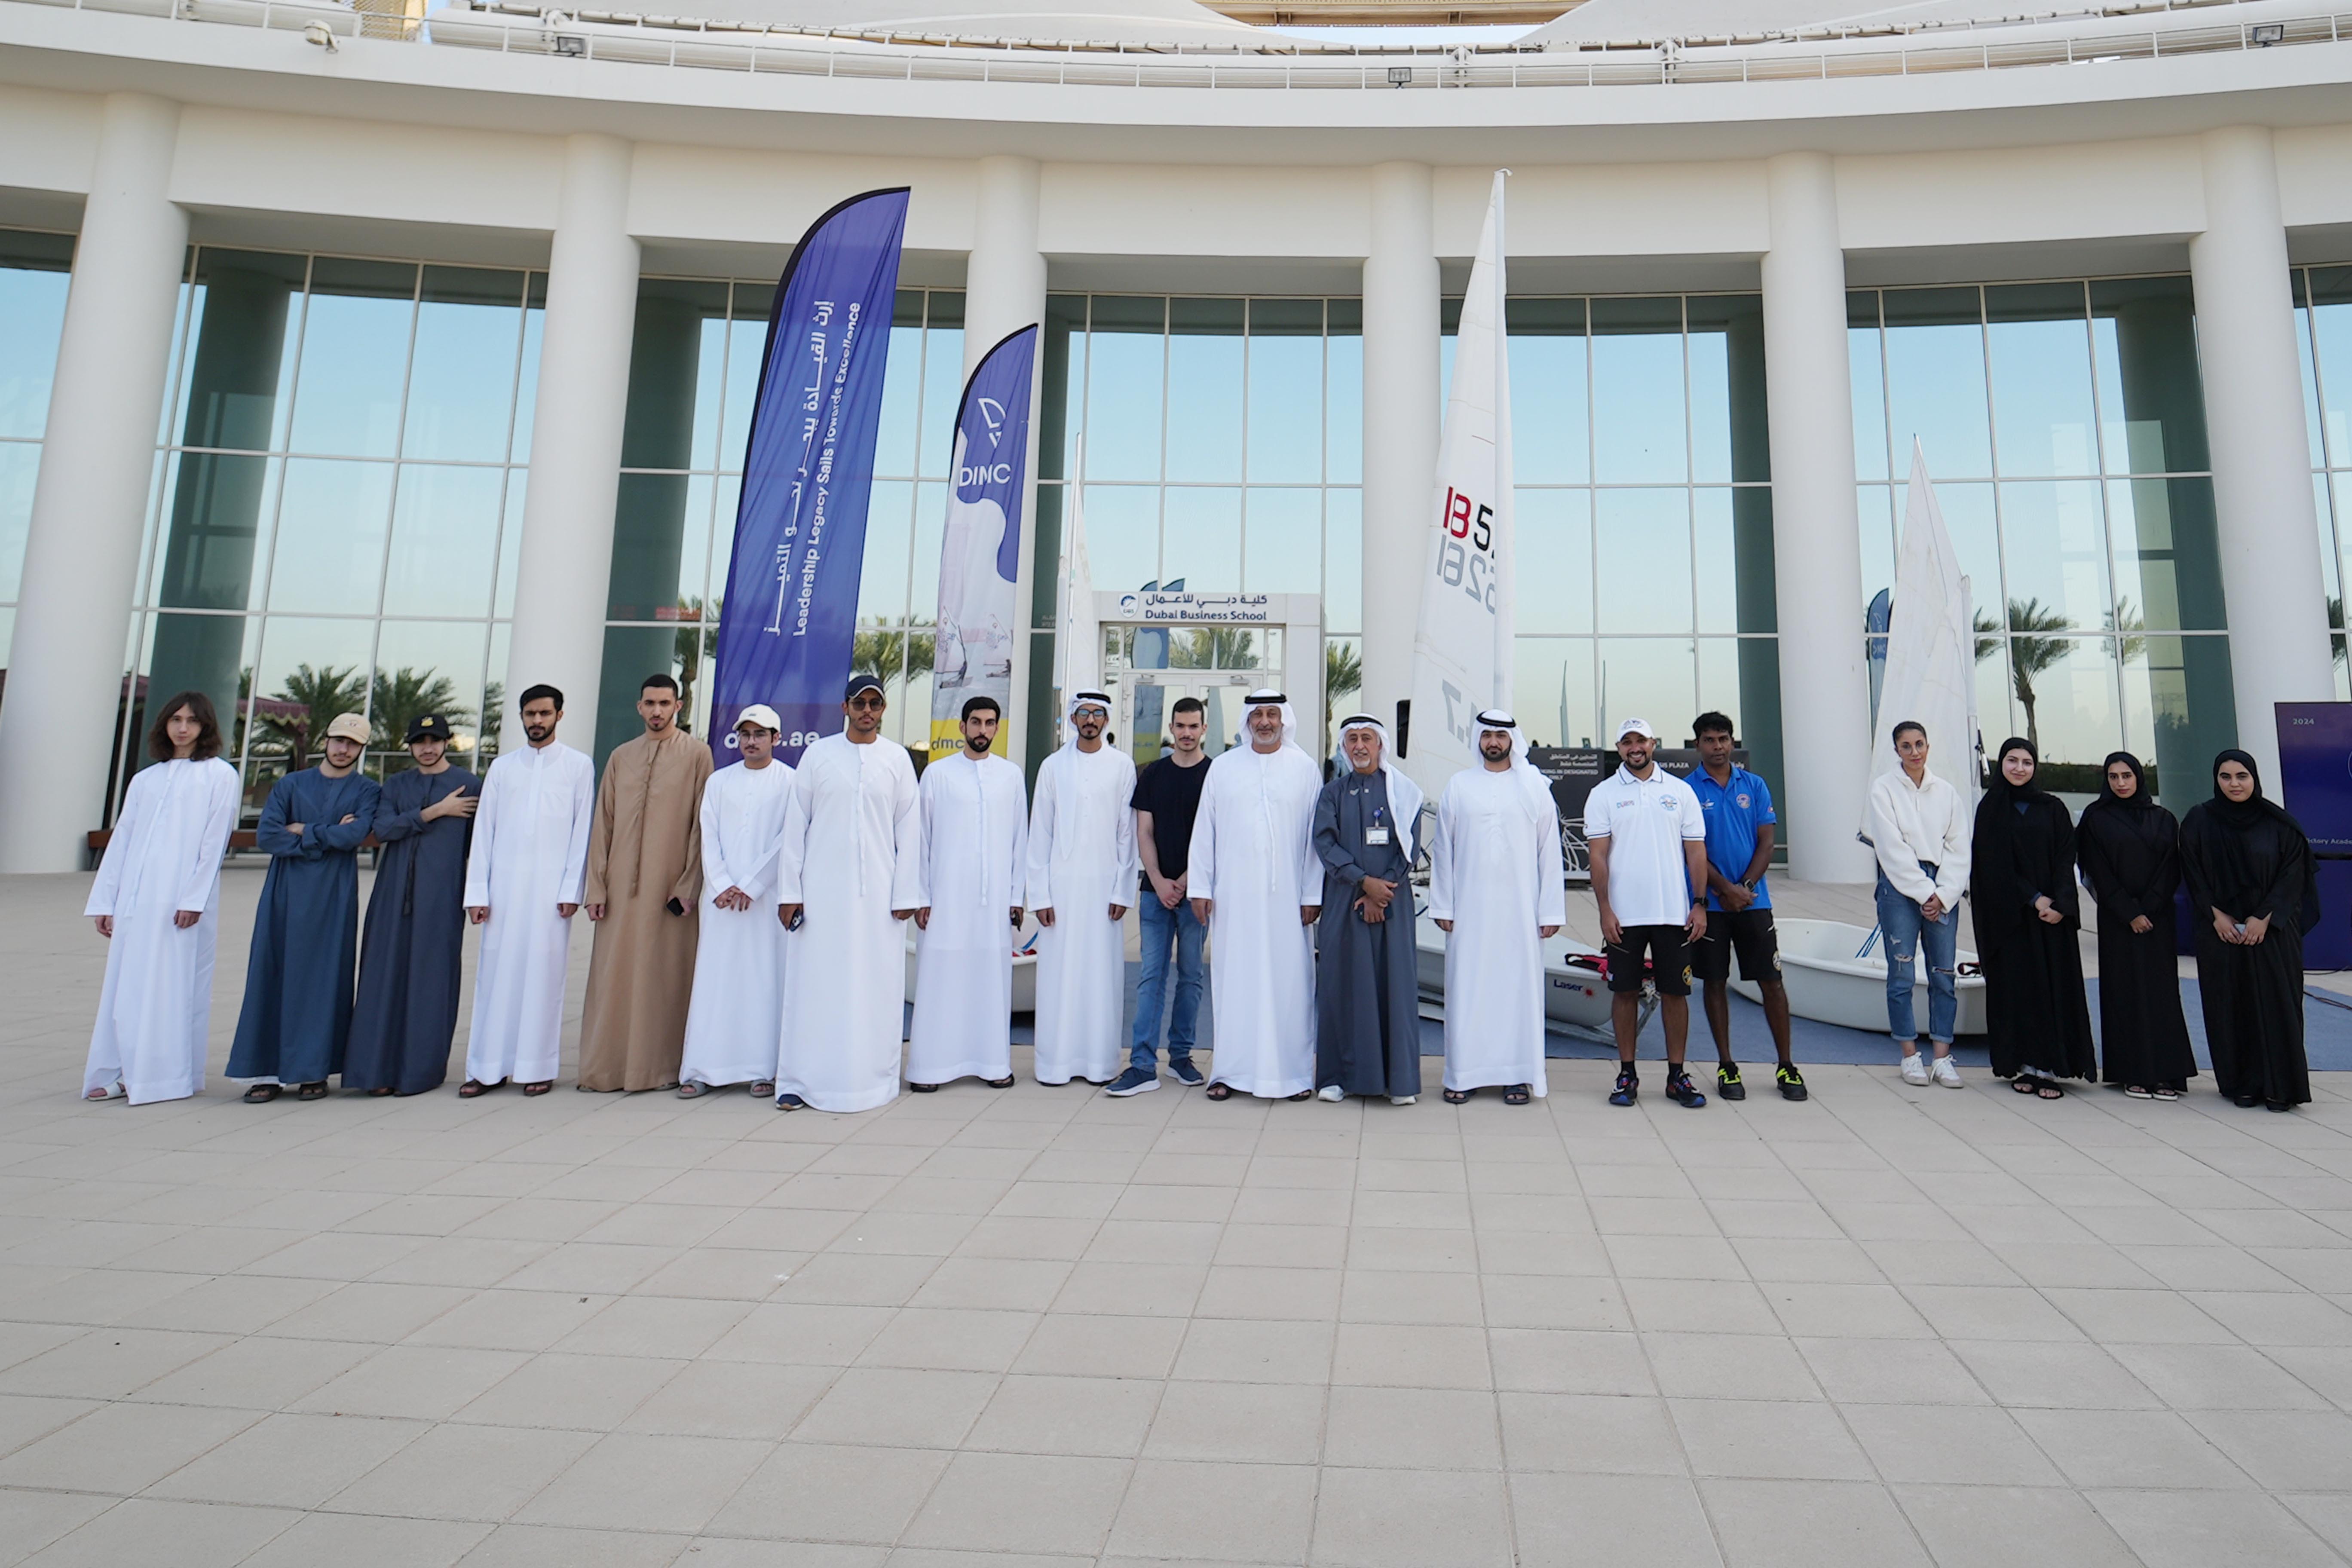 DIMC showcases its activities at the University of Dubai